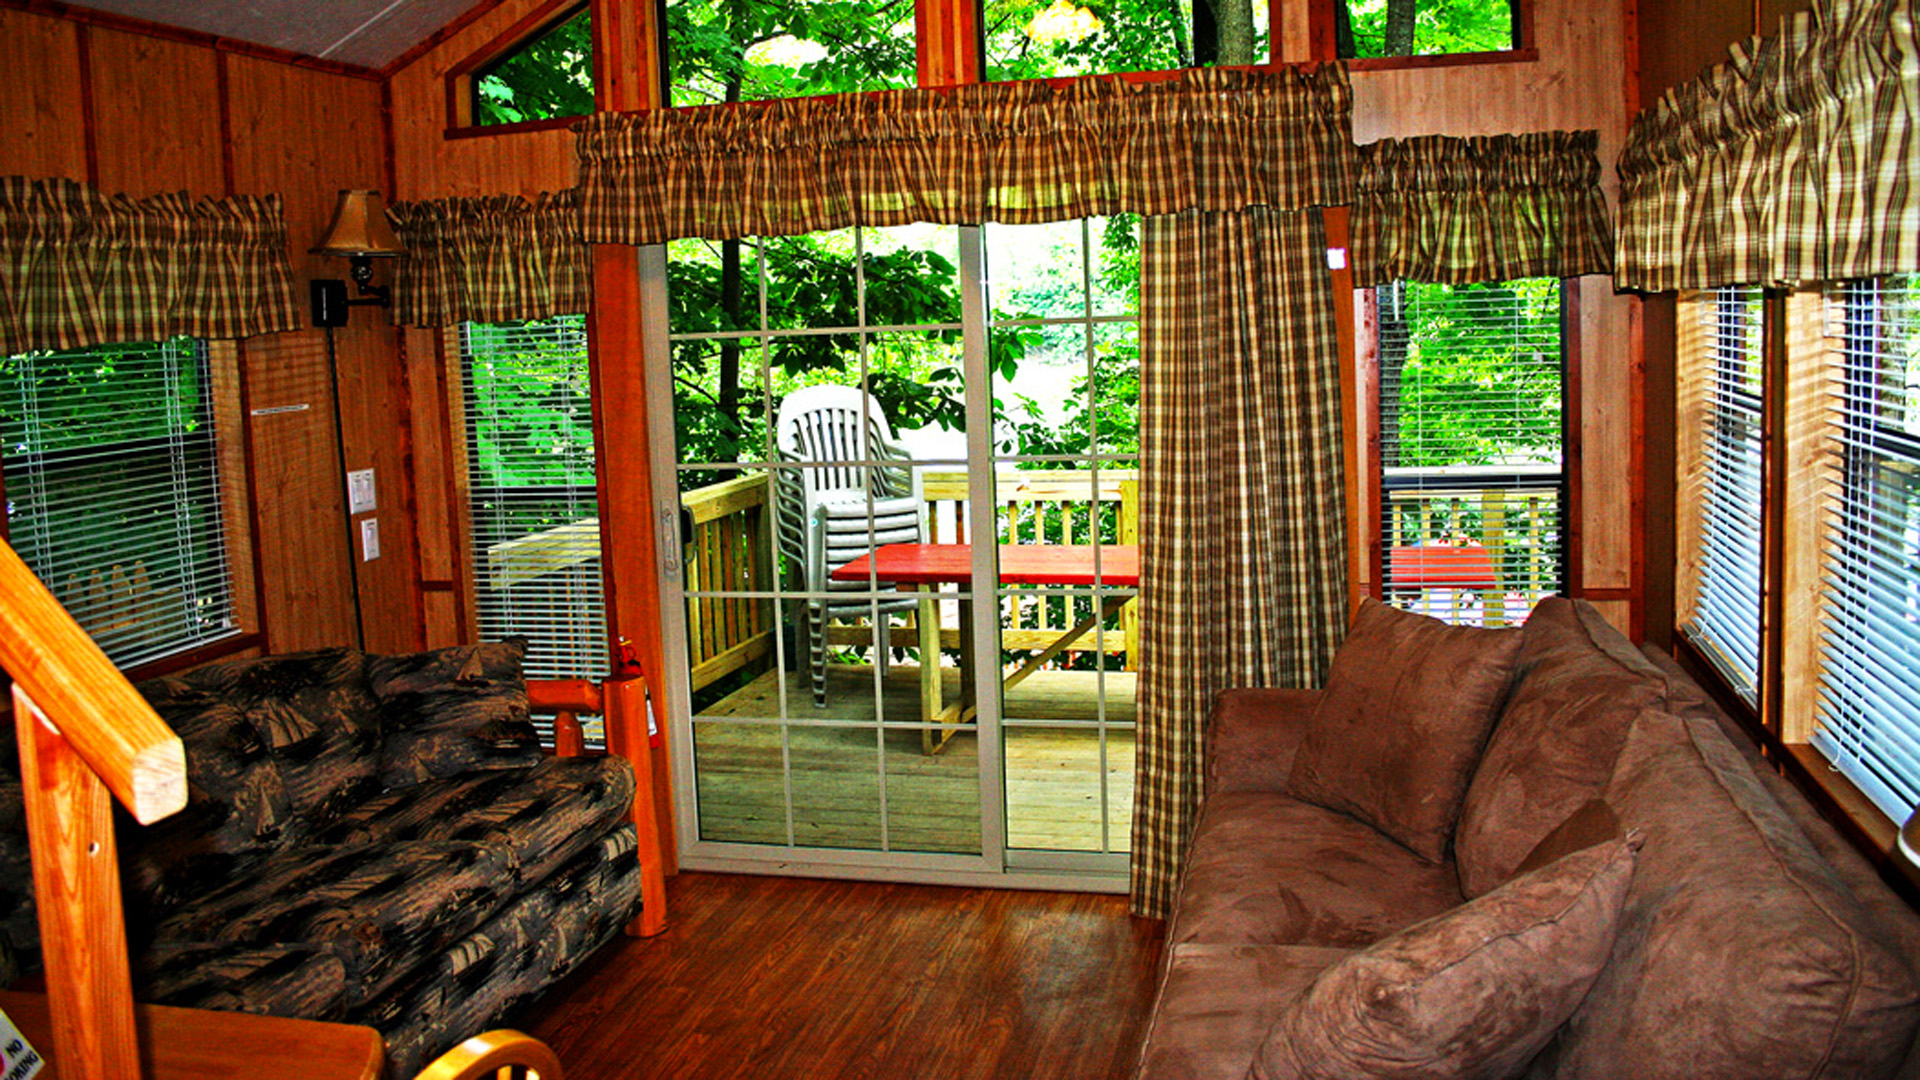 Deluxe Cabin with loft interior